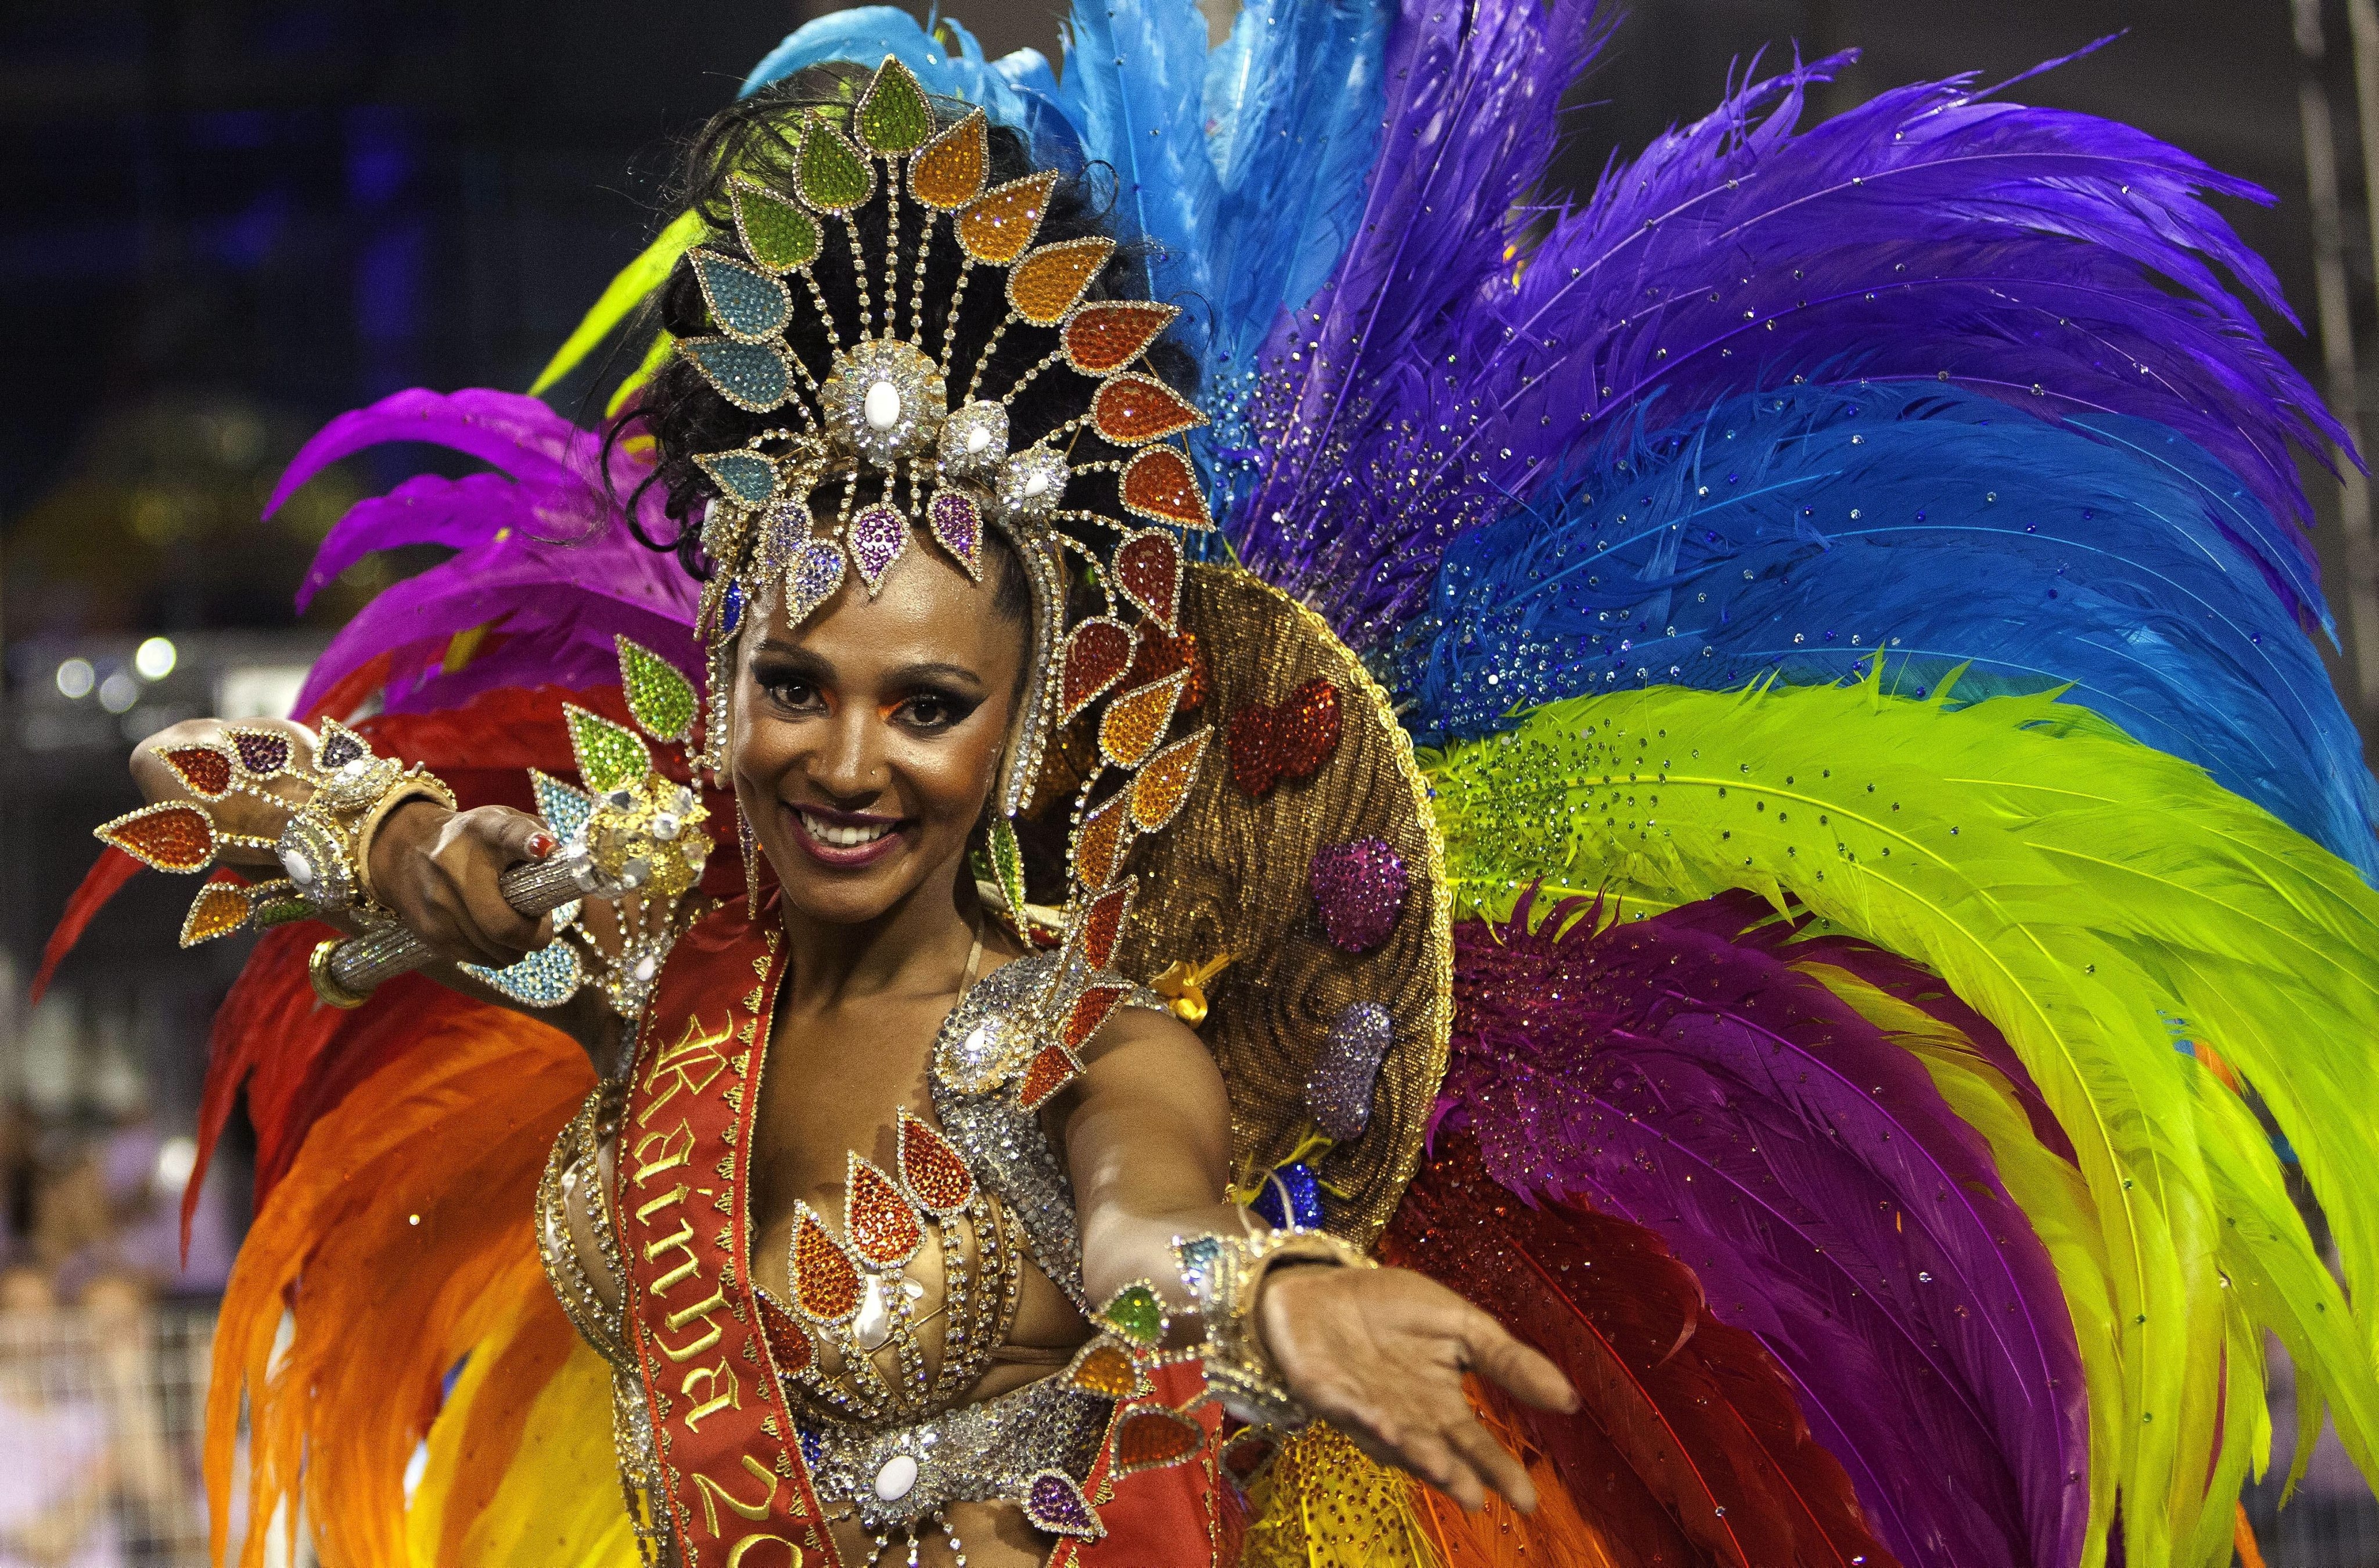 Rio rio brazilian. Карнавал в Рио-де-Жанейро. Карнавал в Рио-де-Жанейро 2022. Рио-де-Жанейро карнавал костюмы. Карнавал в Рио-де-Жанейро (бразильский карнавал).